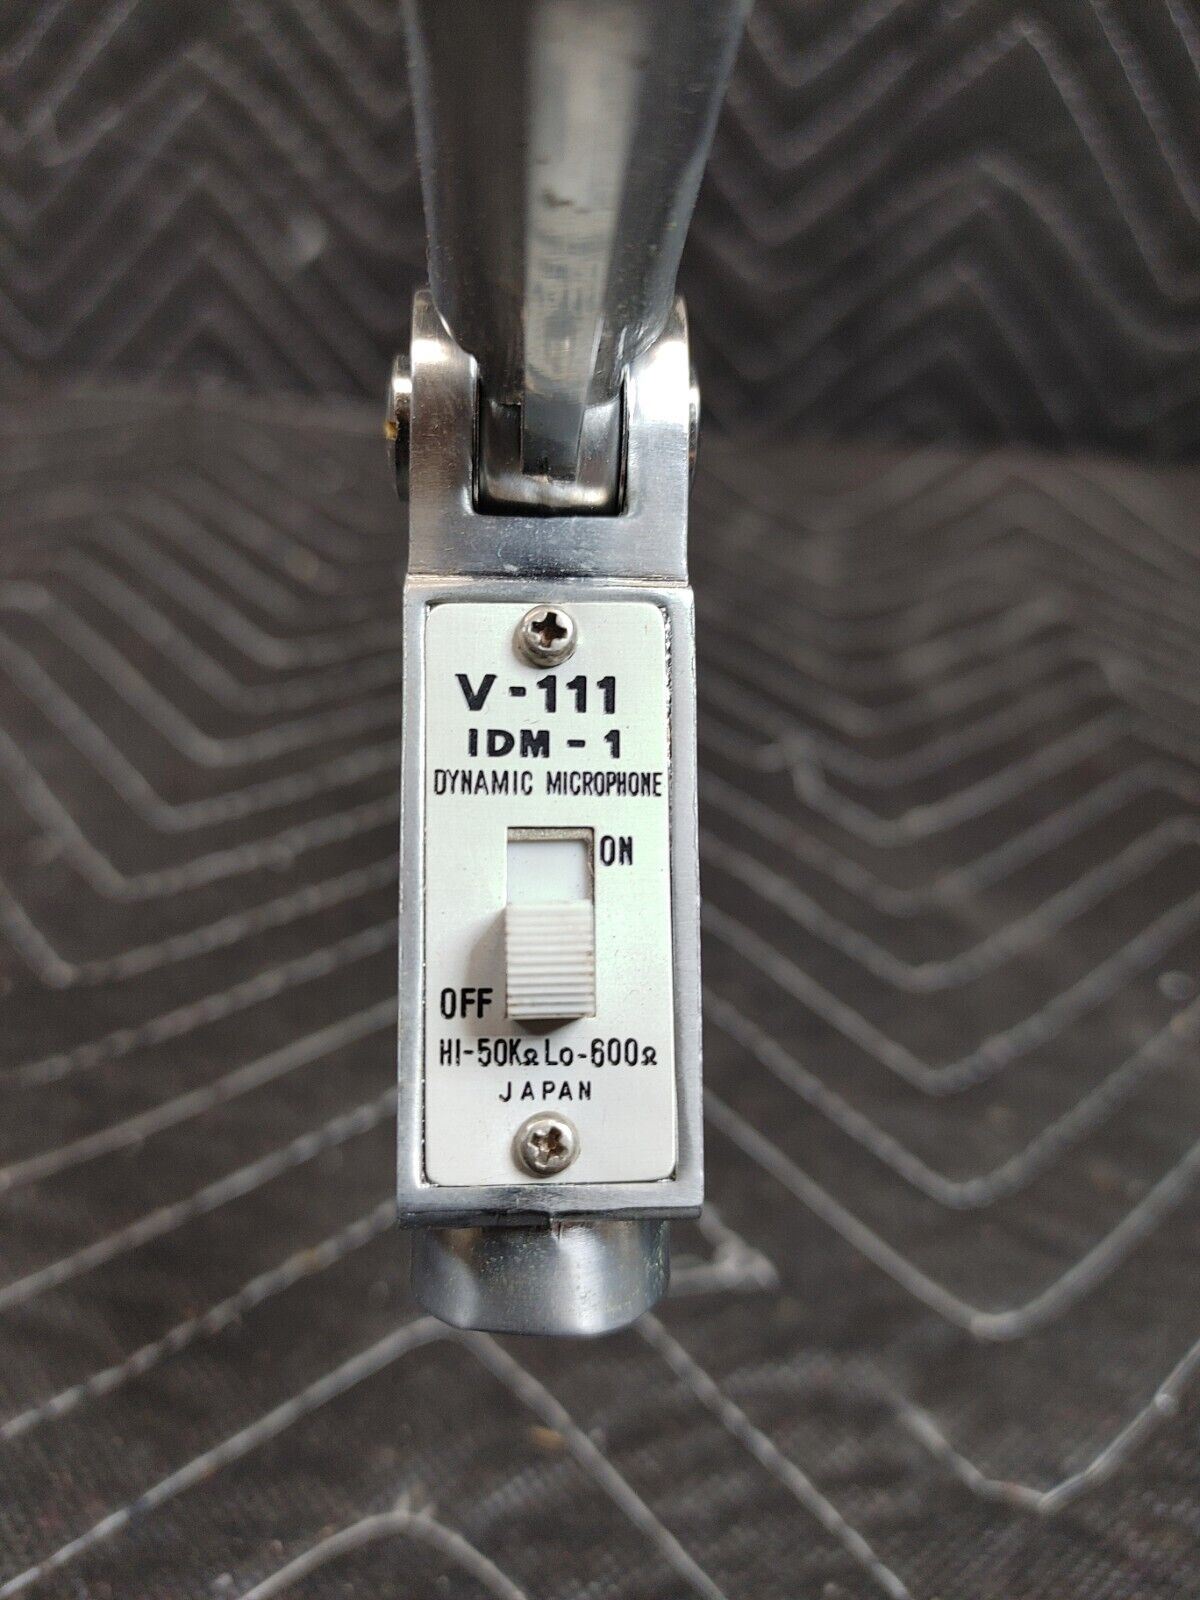 Vintage Veritas Dual Impedance Dynamic Microphone V-111 in Original Box